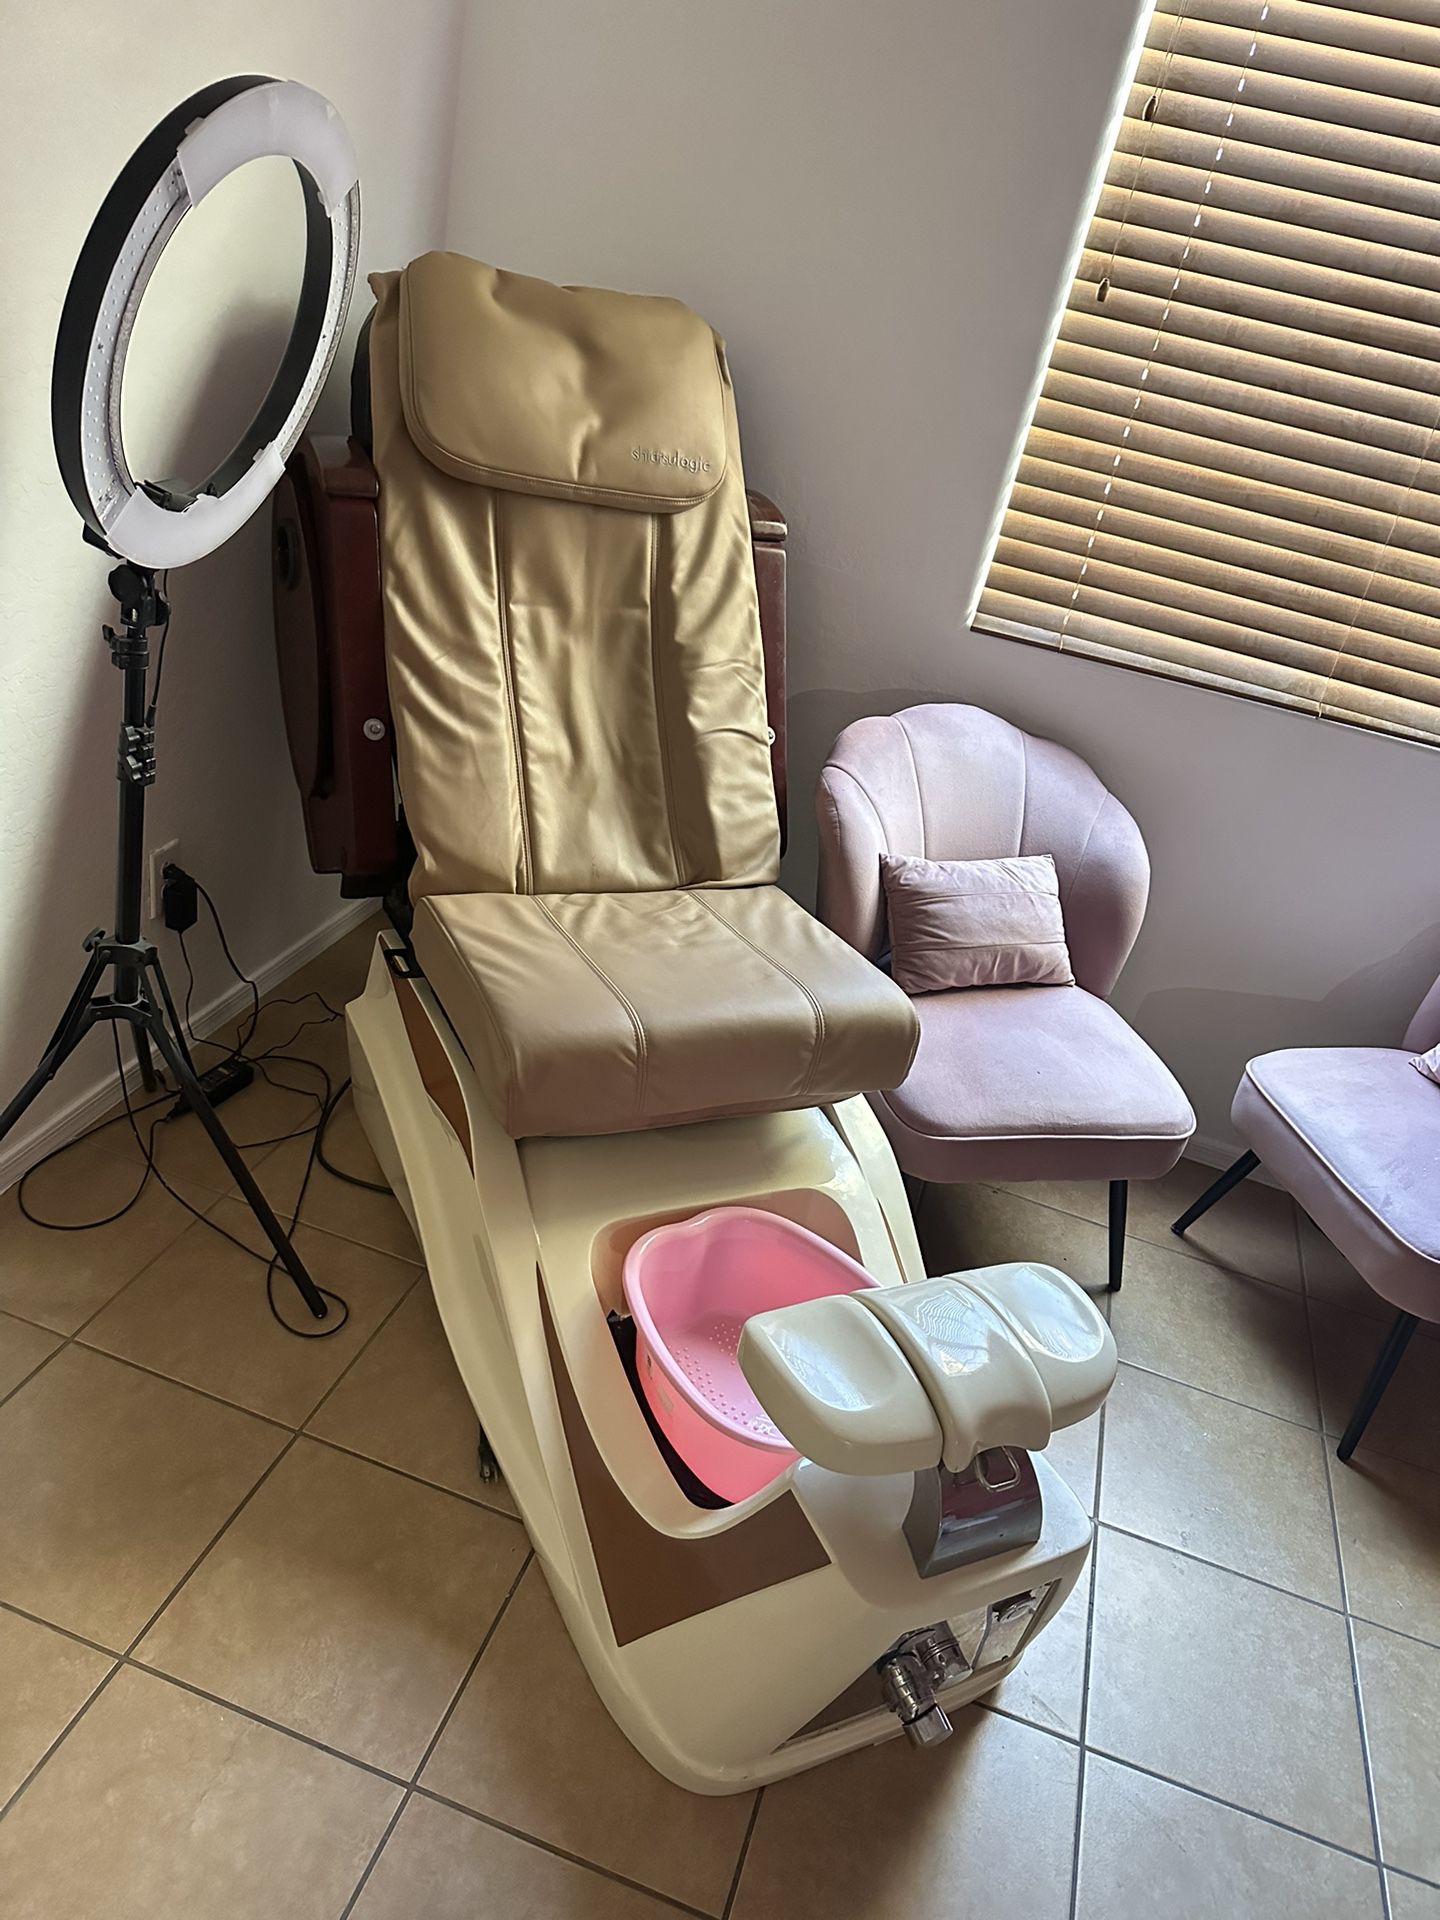 Pedicure Chair